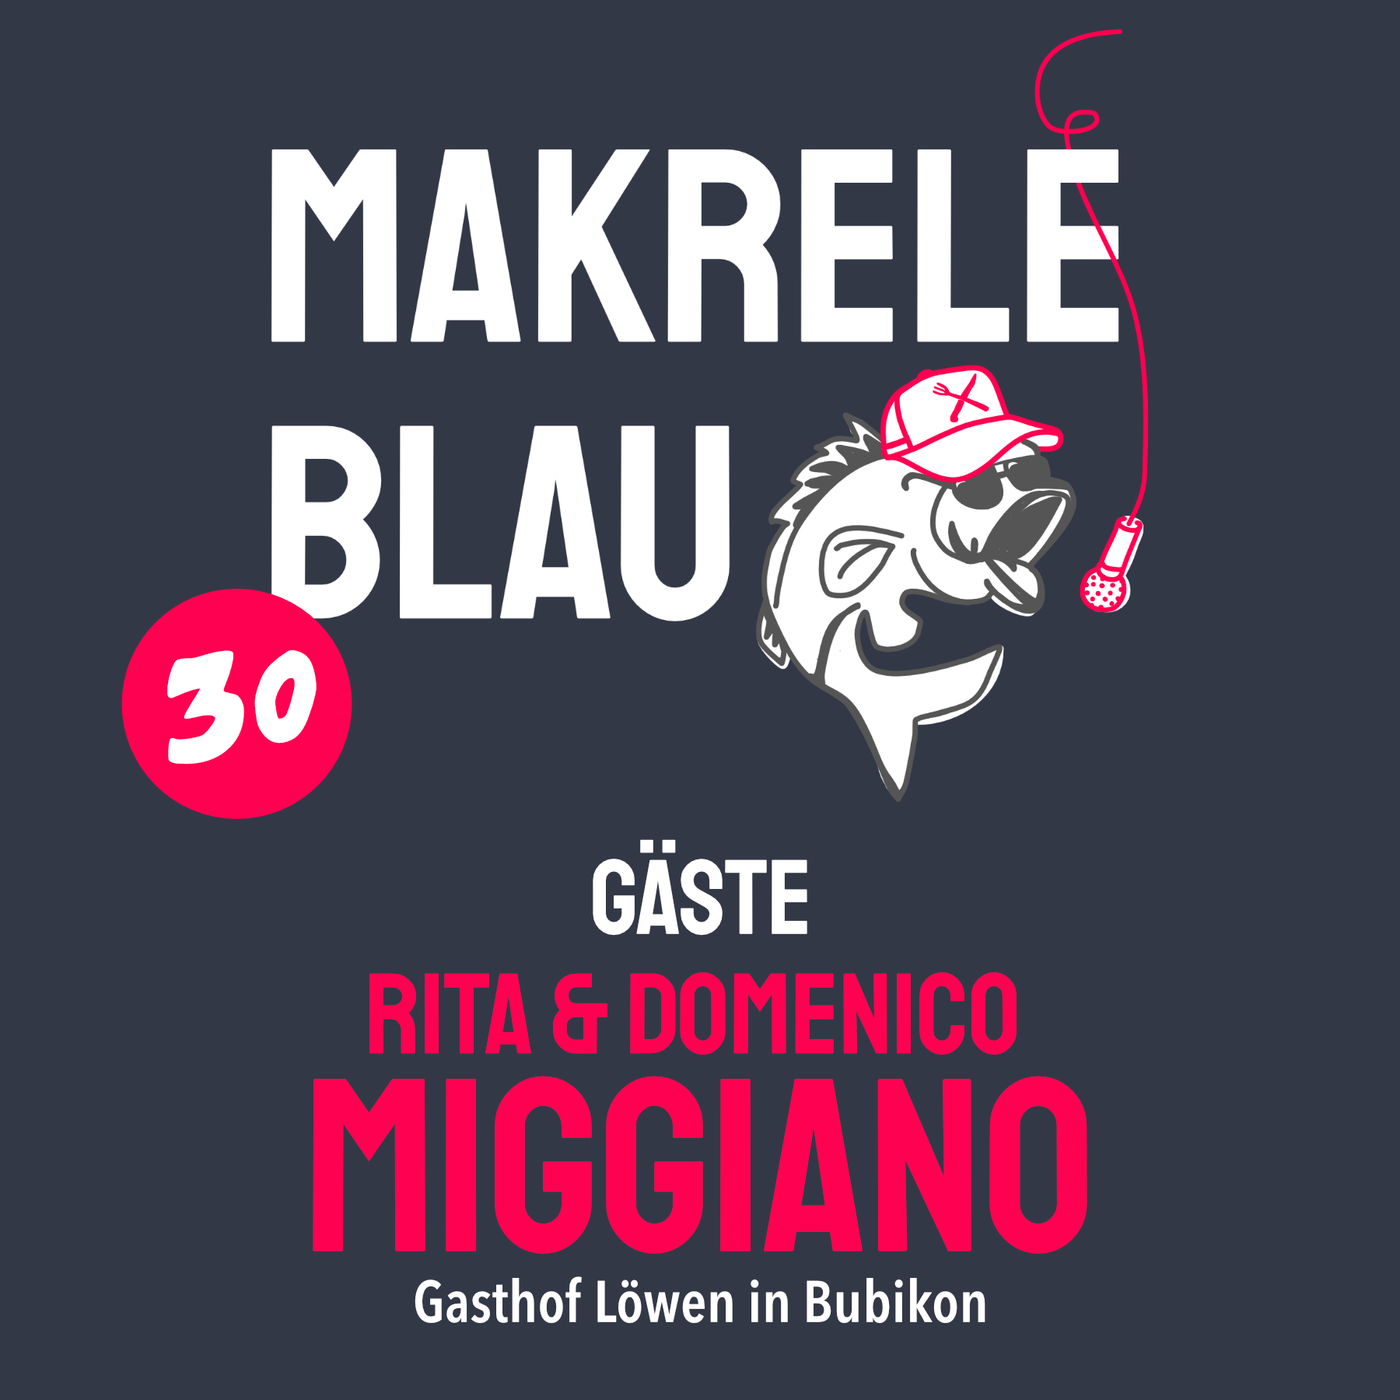 Makrele Blau #30 – Usbildä mit Herz, mit dä Rita & em Domenico Miggiano